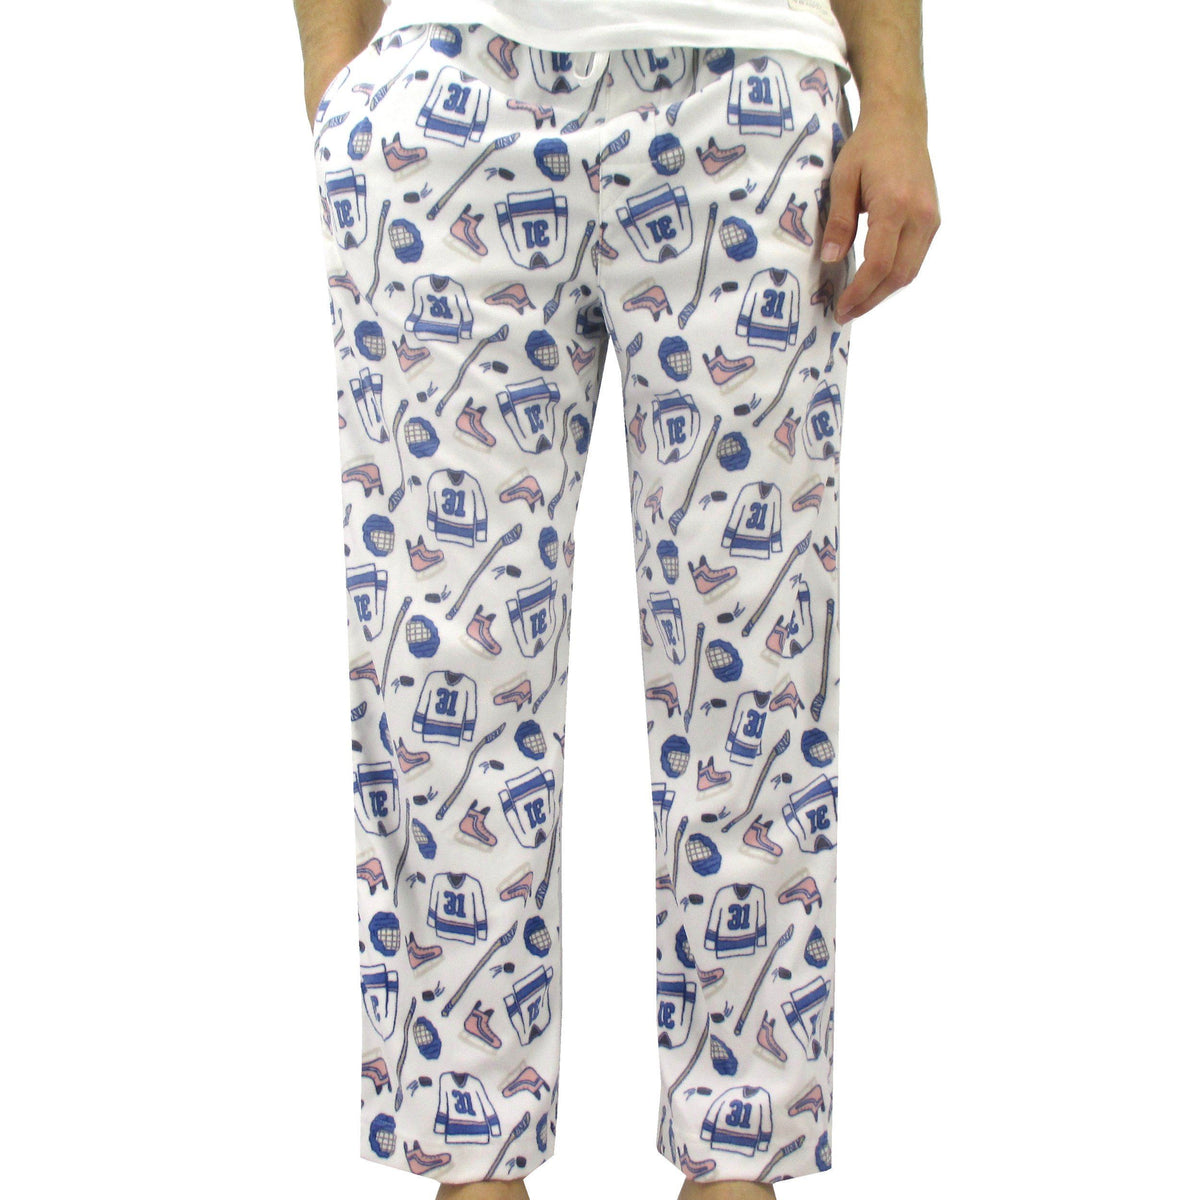 Basketball Print Pajama Pants, Men Soft Flannel Lounge Pants, Elastic Waist  Pajama Bottoms, Sports Print Comfort Wear, Sports Theme Gifts 